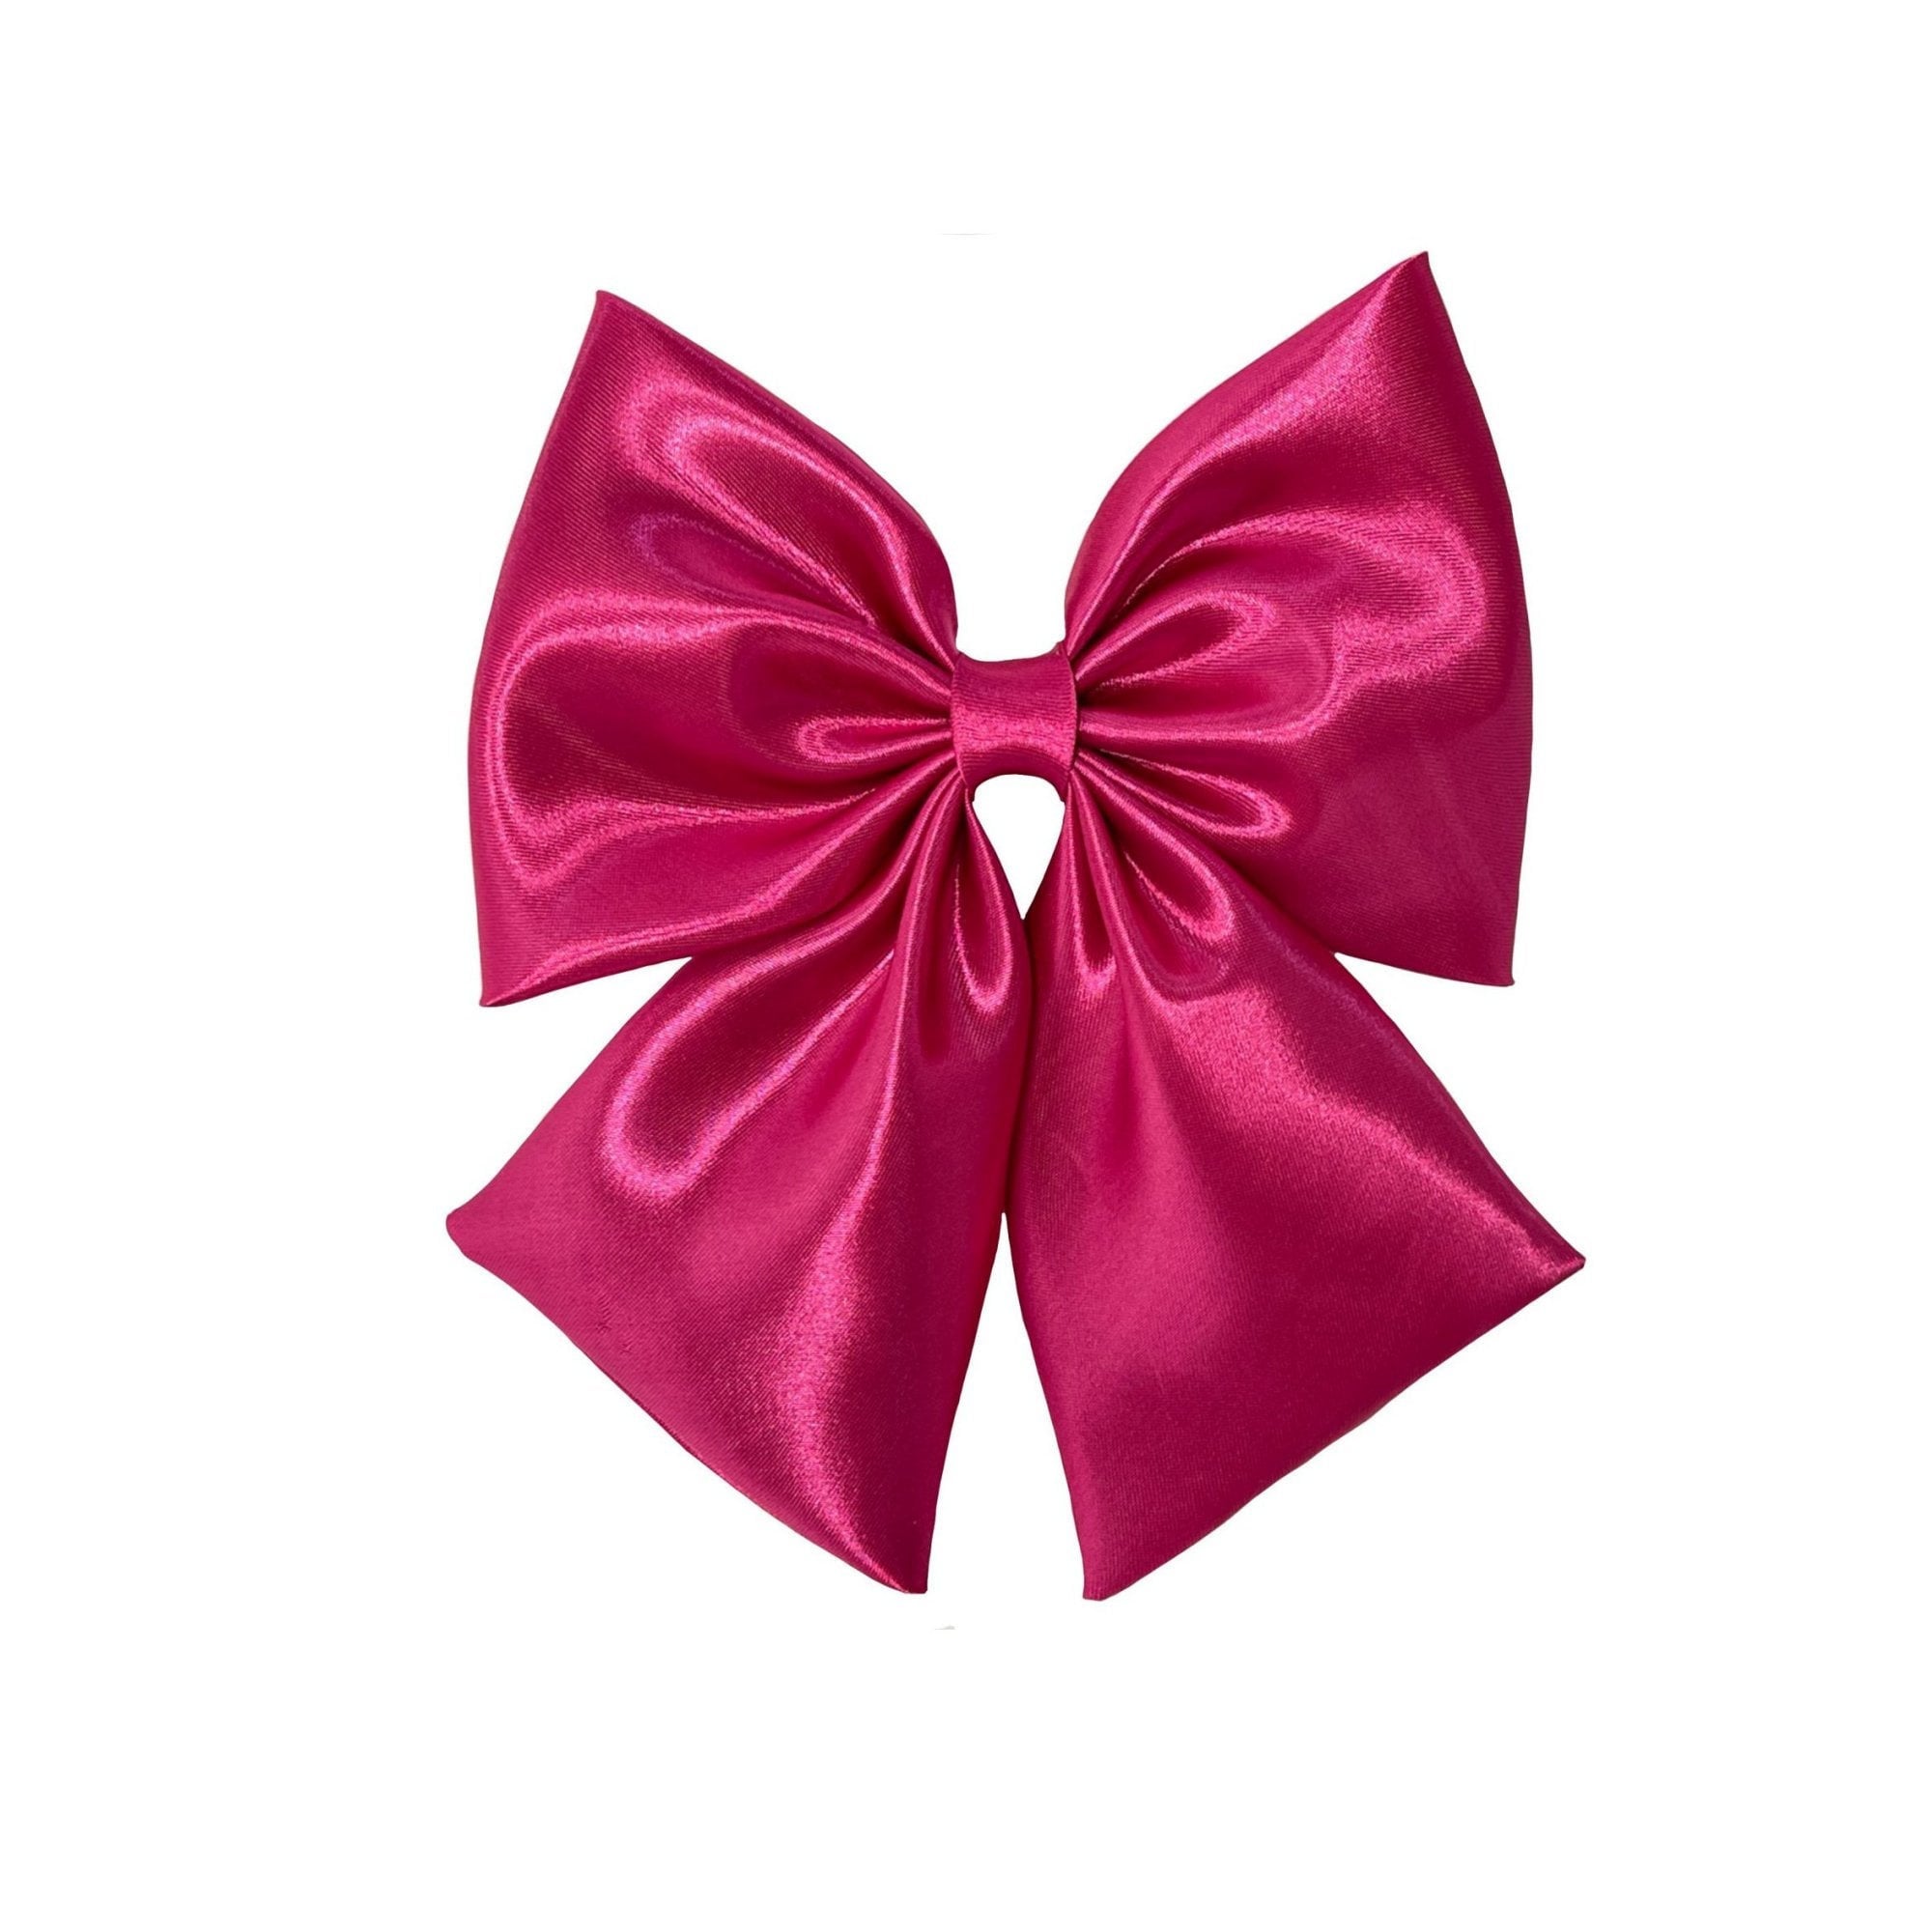  Trnerm Hair Bows for Women 3PCS Hair Ribbons Hot Pink